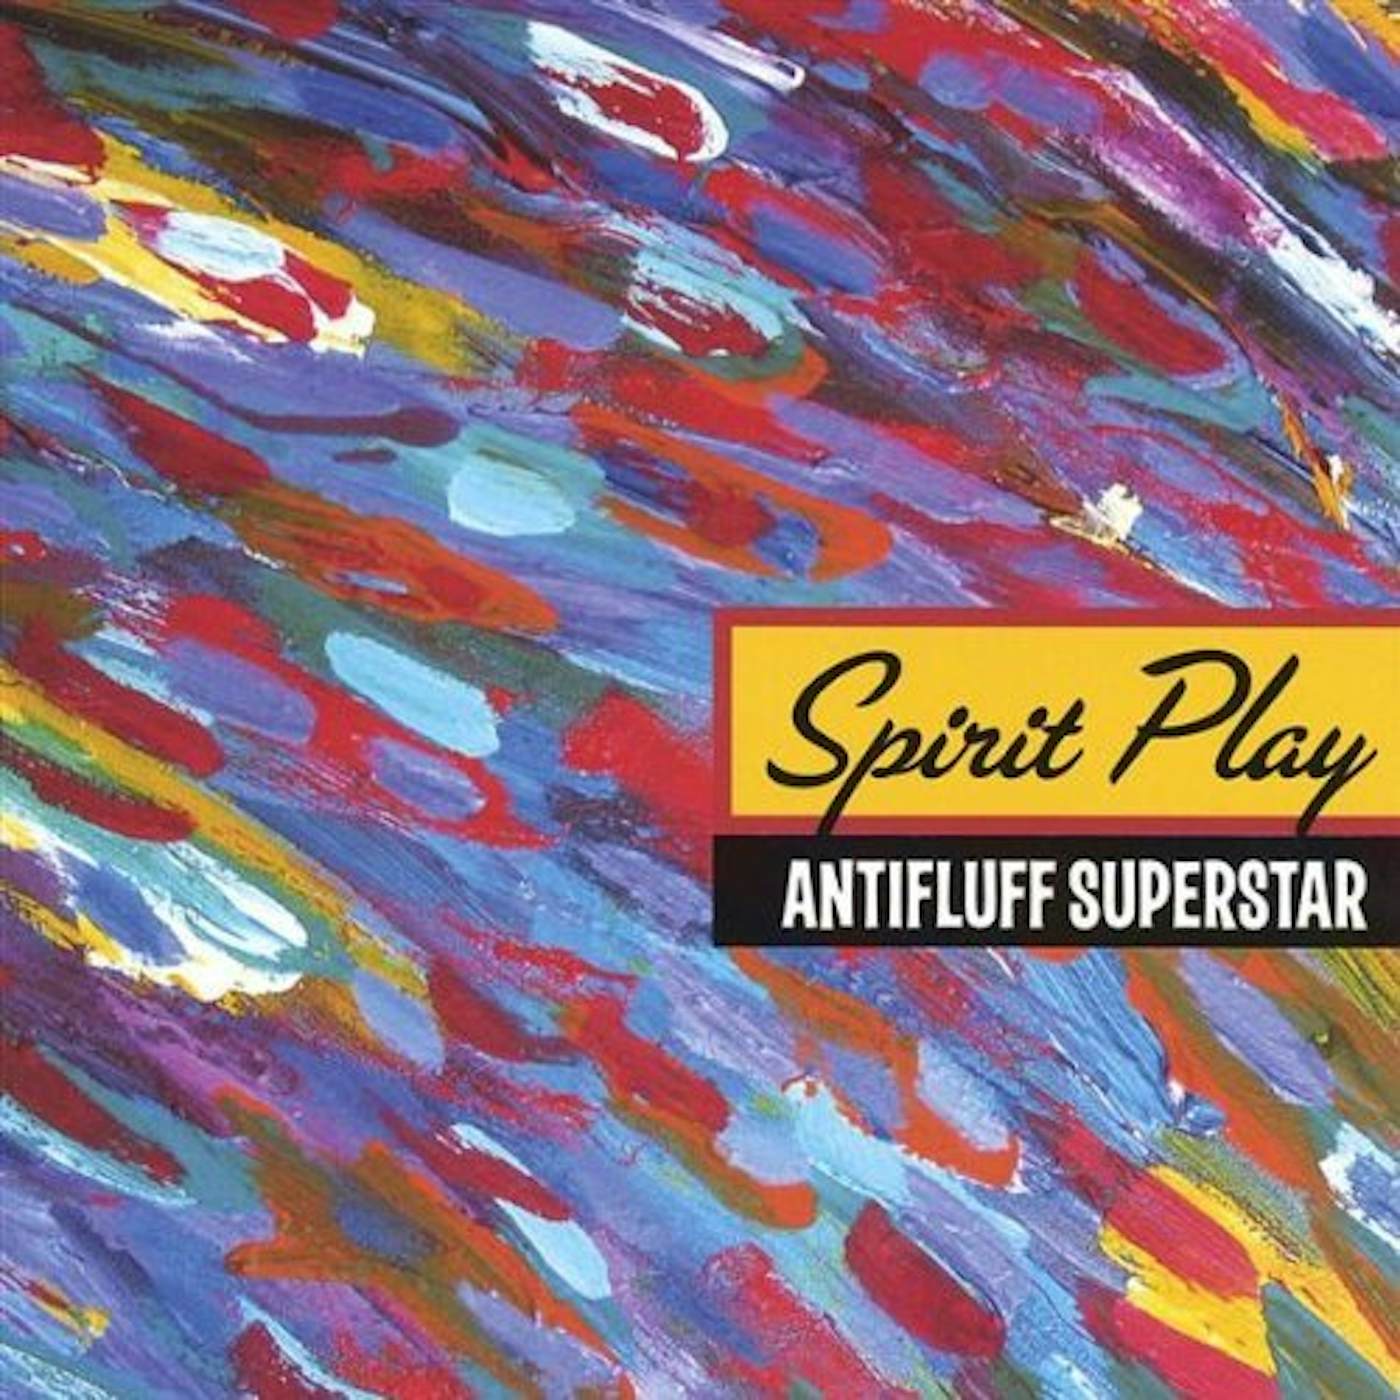 Antifluff Superstar SPIRIT PLAY CD